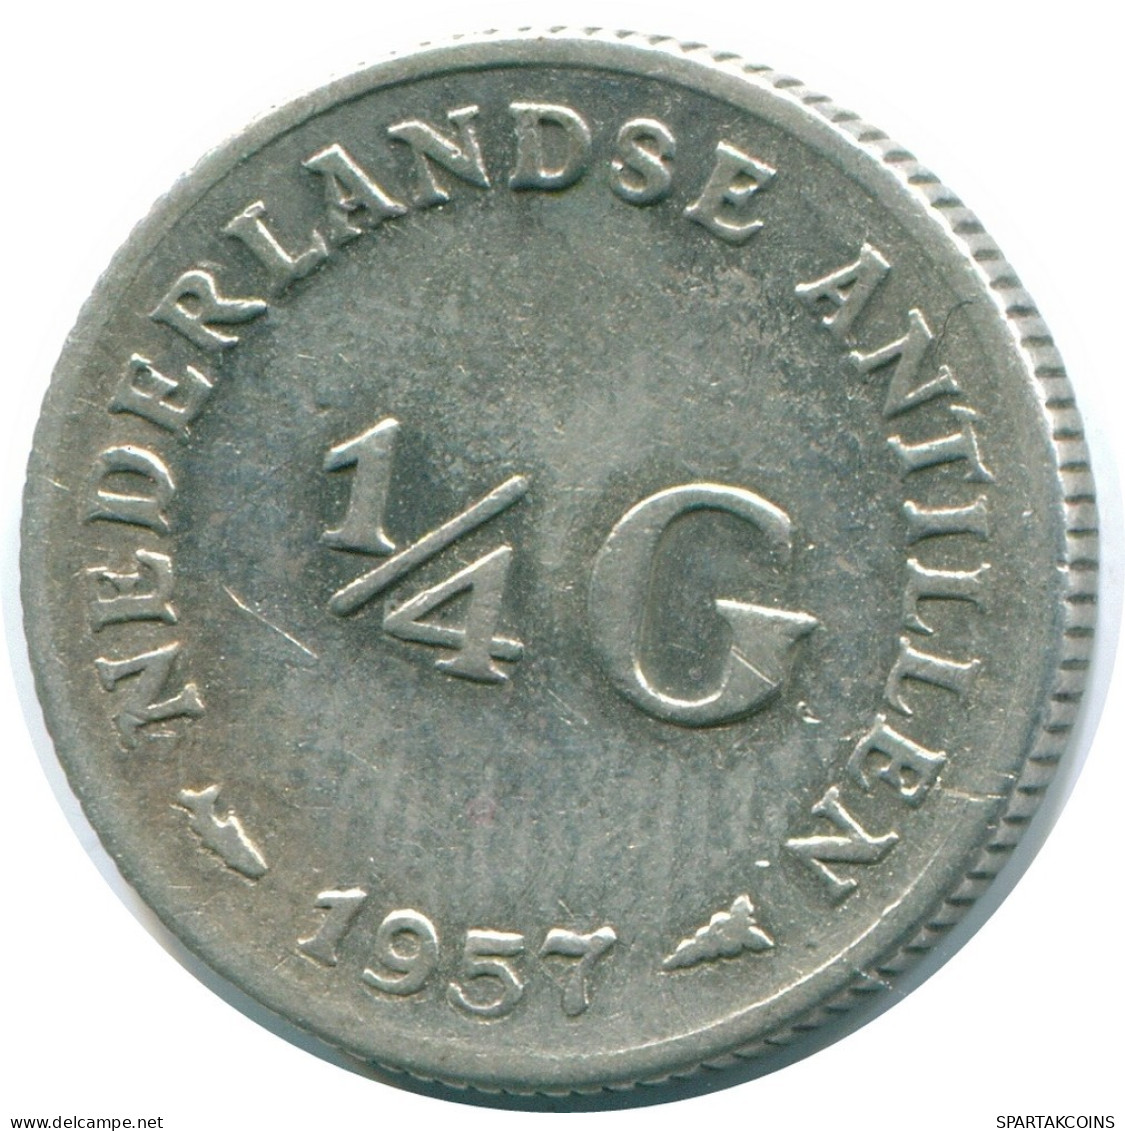 1/4 GULDEN 1957 NIEDERLÄNDISCHE ANTILLEN SILBER Koloniale Münze #NL10985.4.D.A - Netherlands Antilles